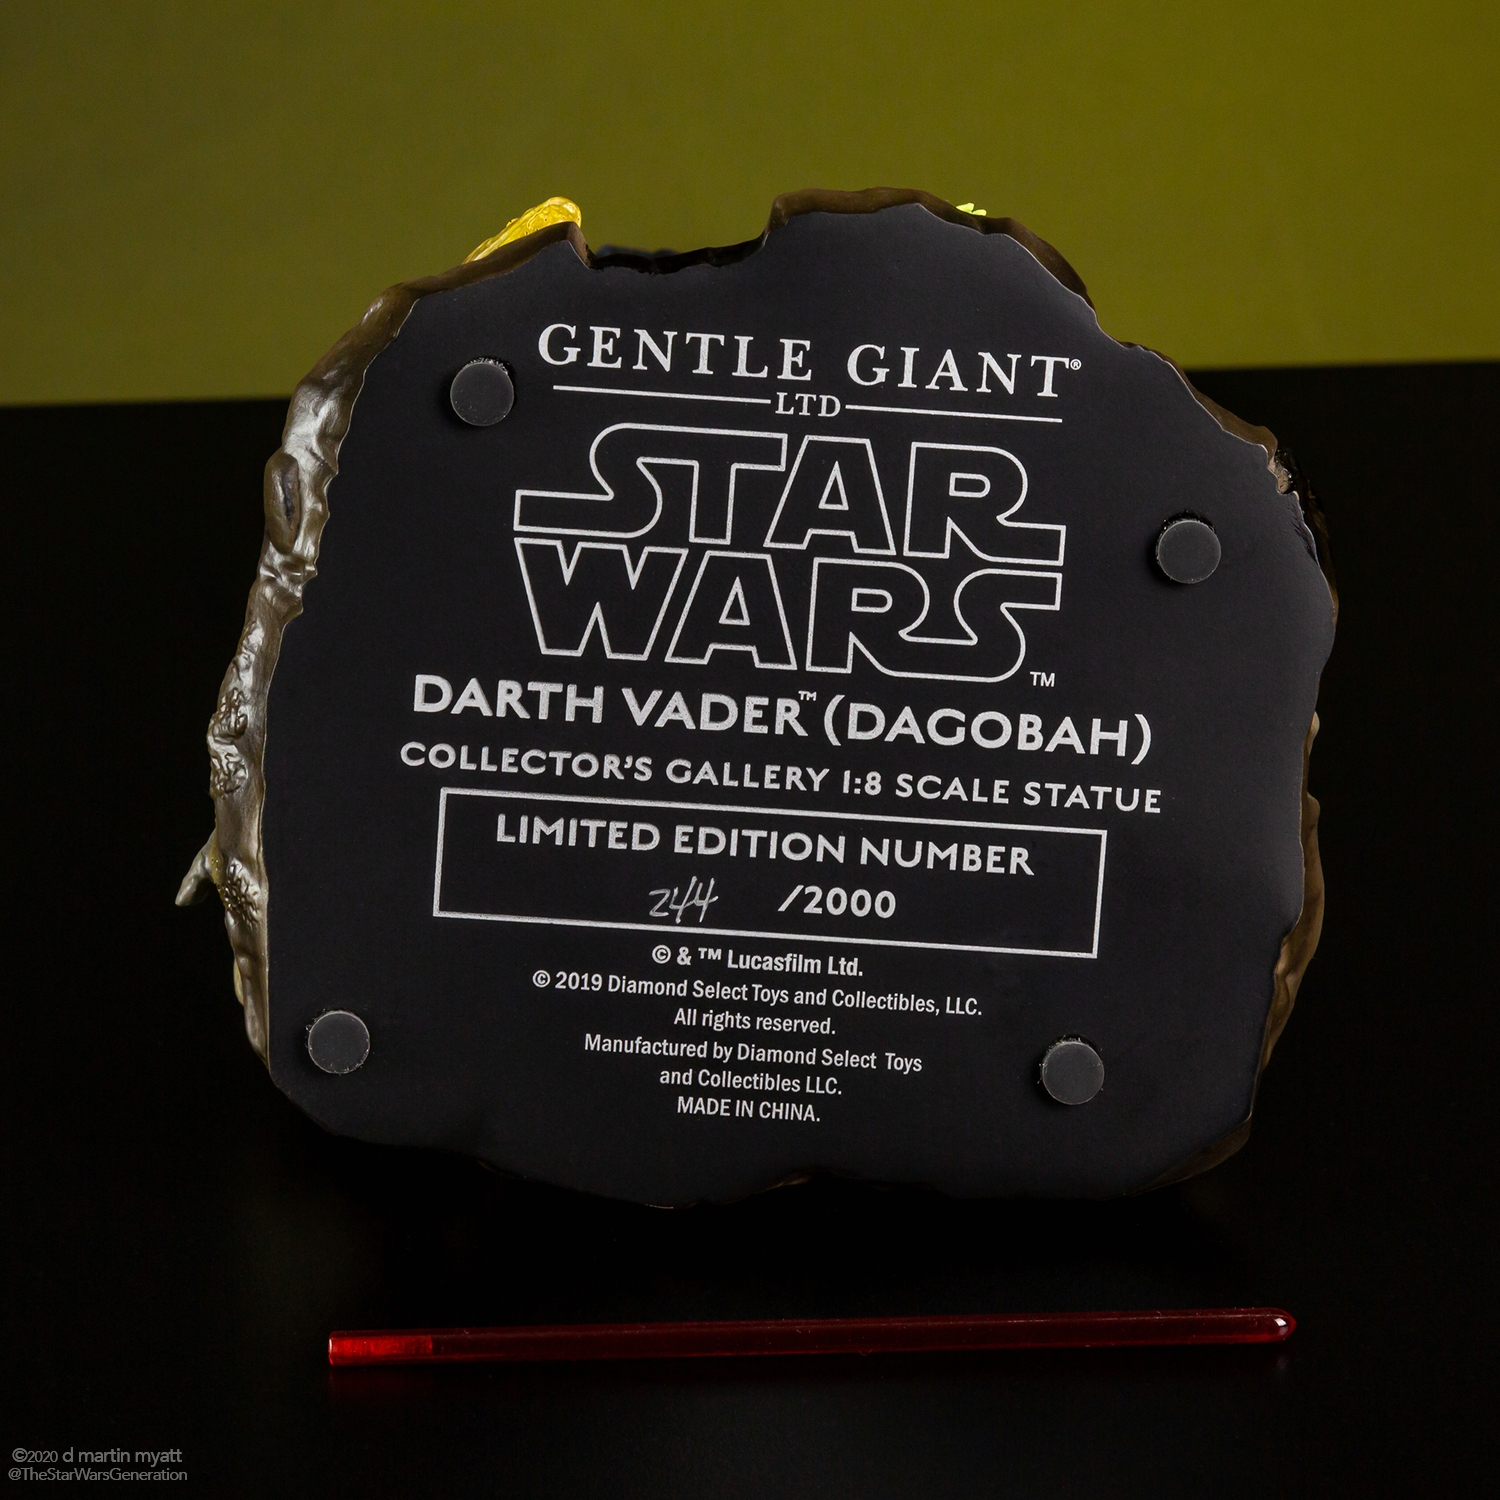 Darth-Vader-Dagobah-Statue-Gentle-Giant-006.jpg